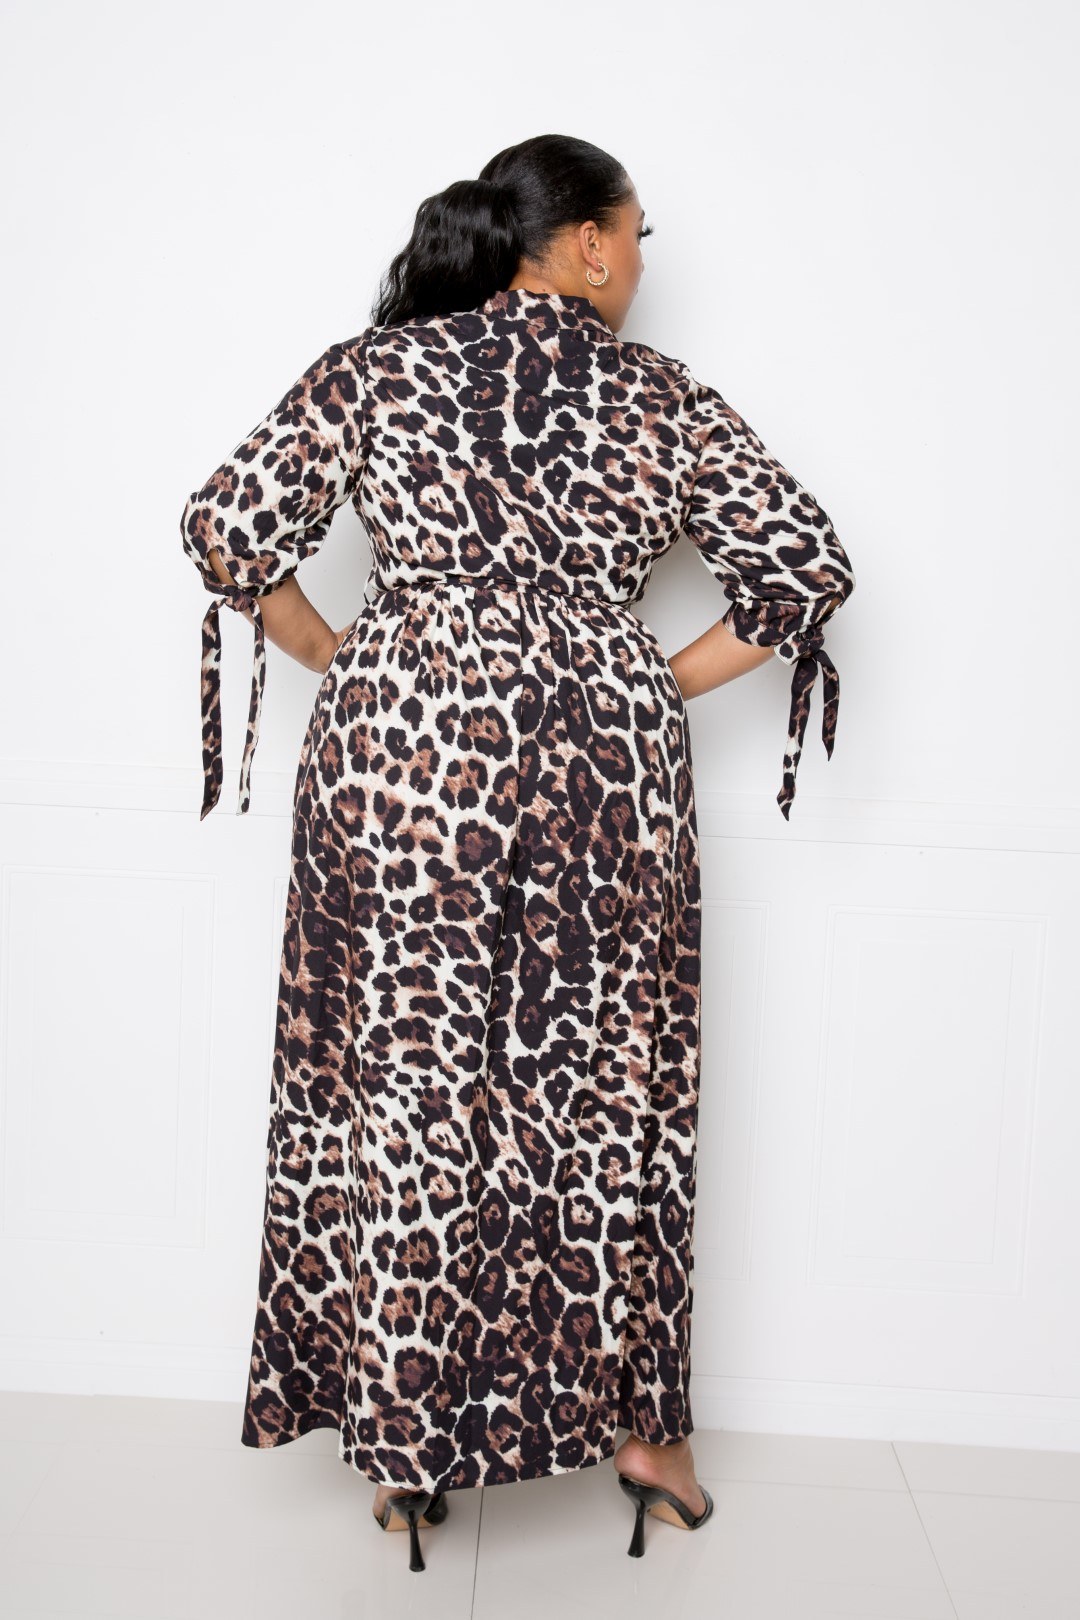 Leopard Printed Dress - Laconic Fashion